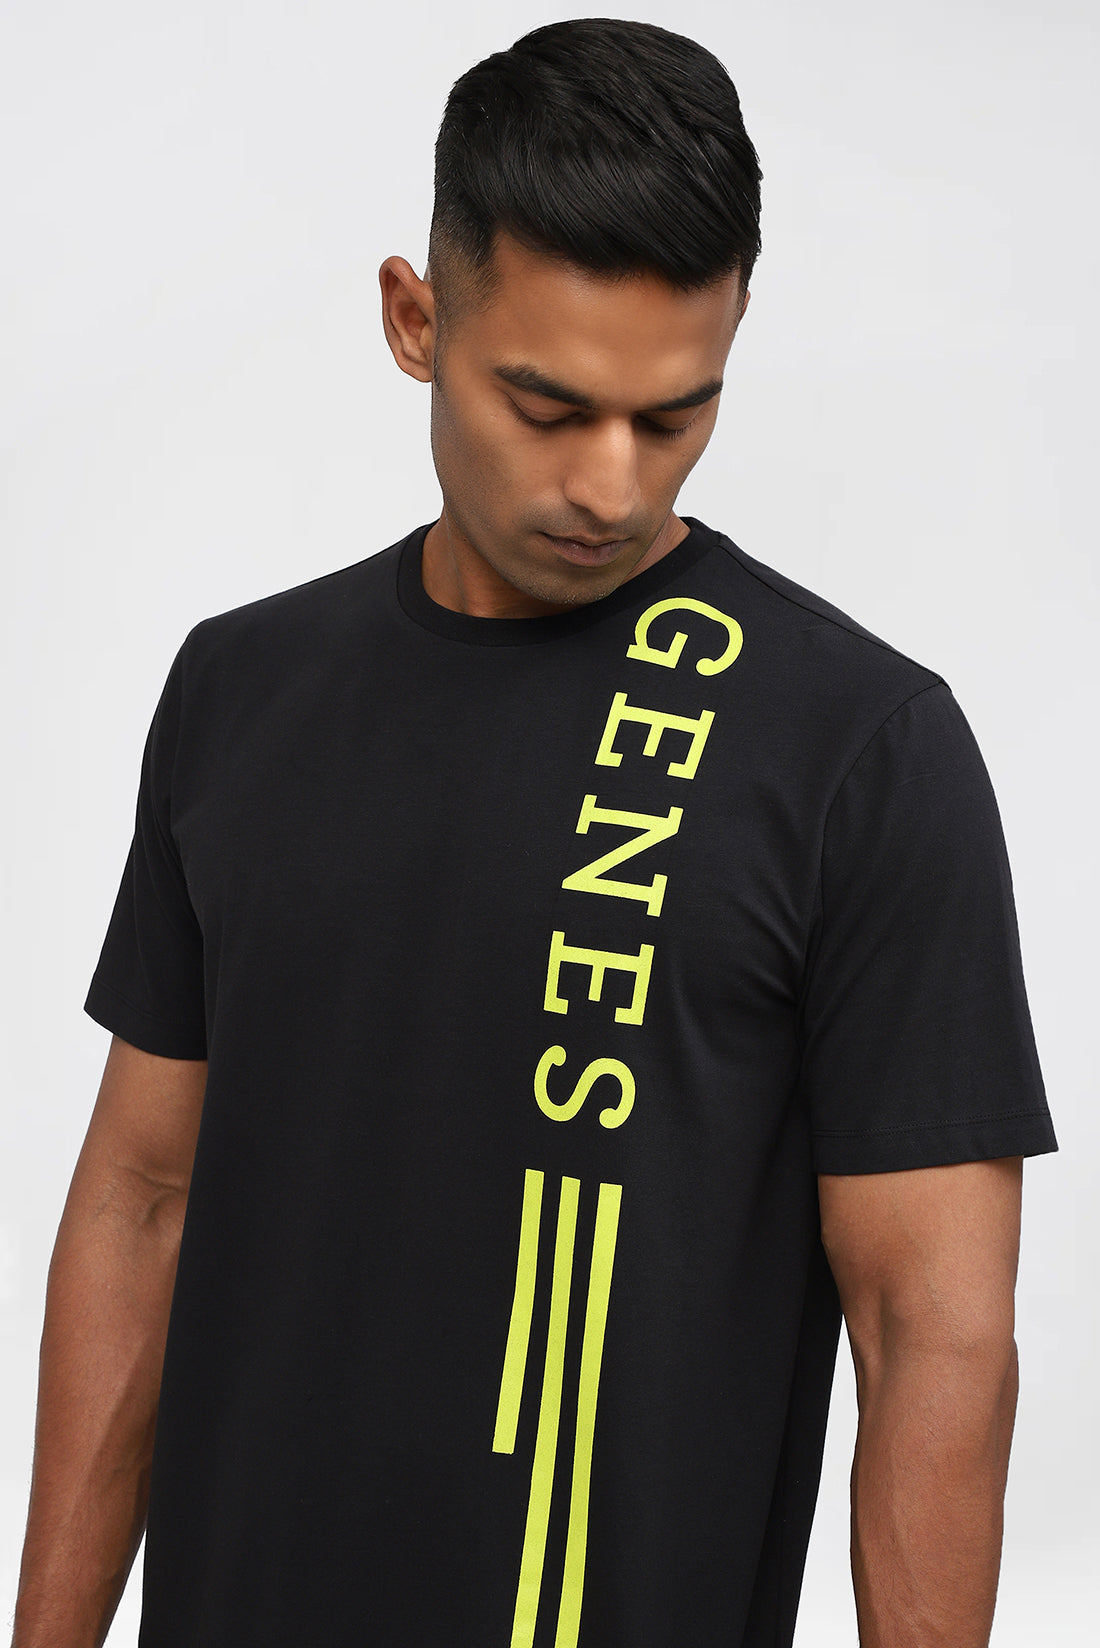 Casuals Mens T-Shirt with Genes Monogram